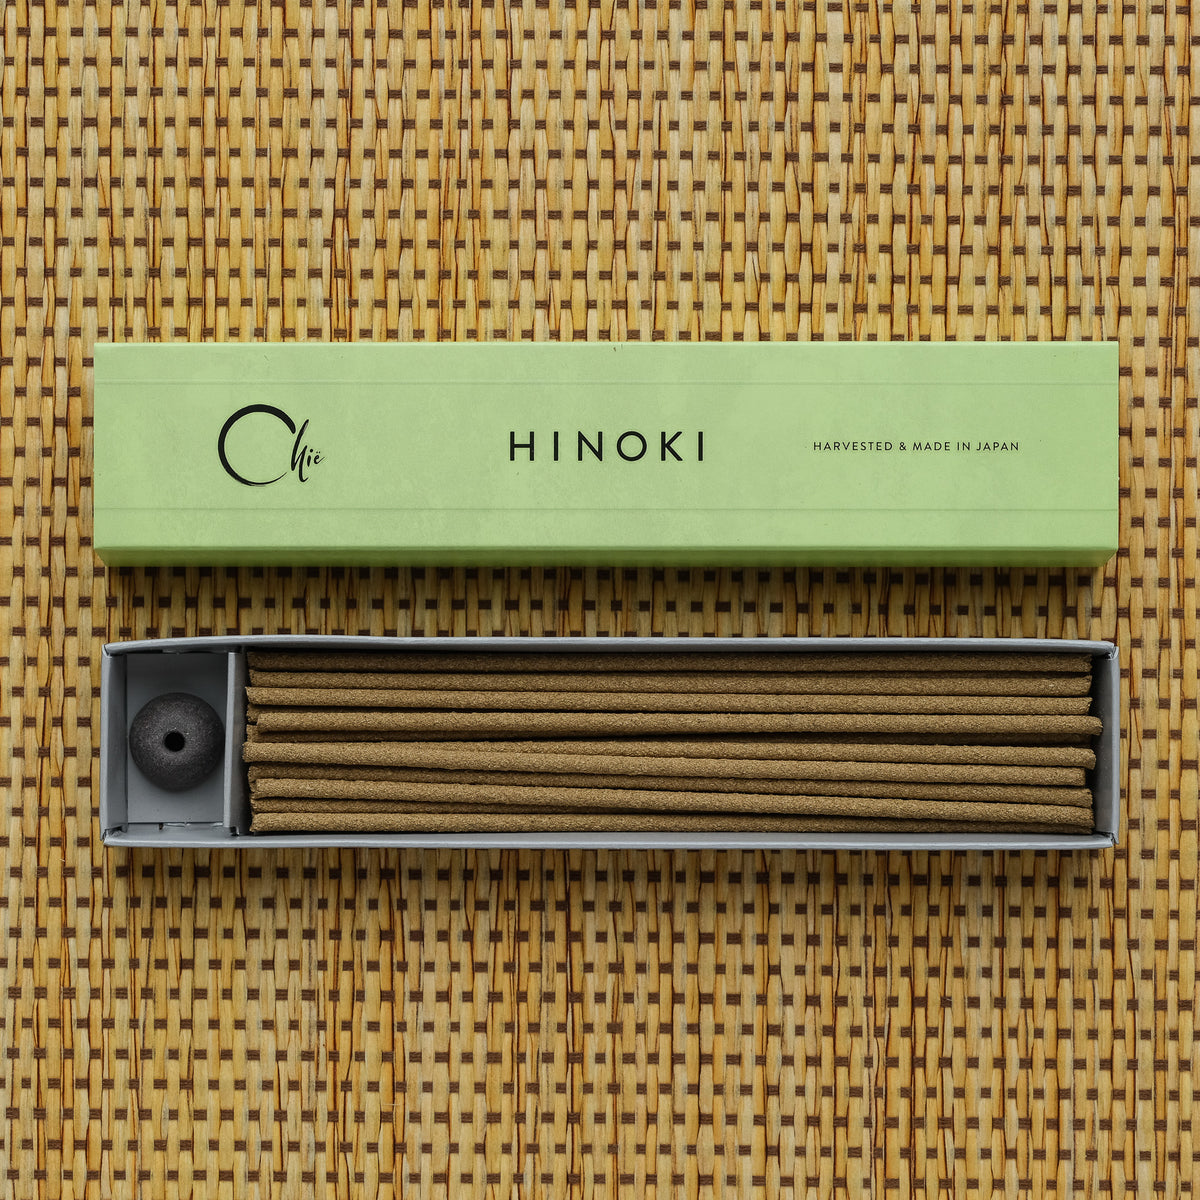 Chie Hinoki (Japanese Cypress) Natural Incense